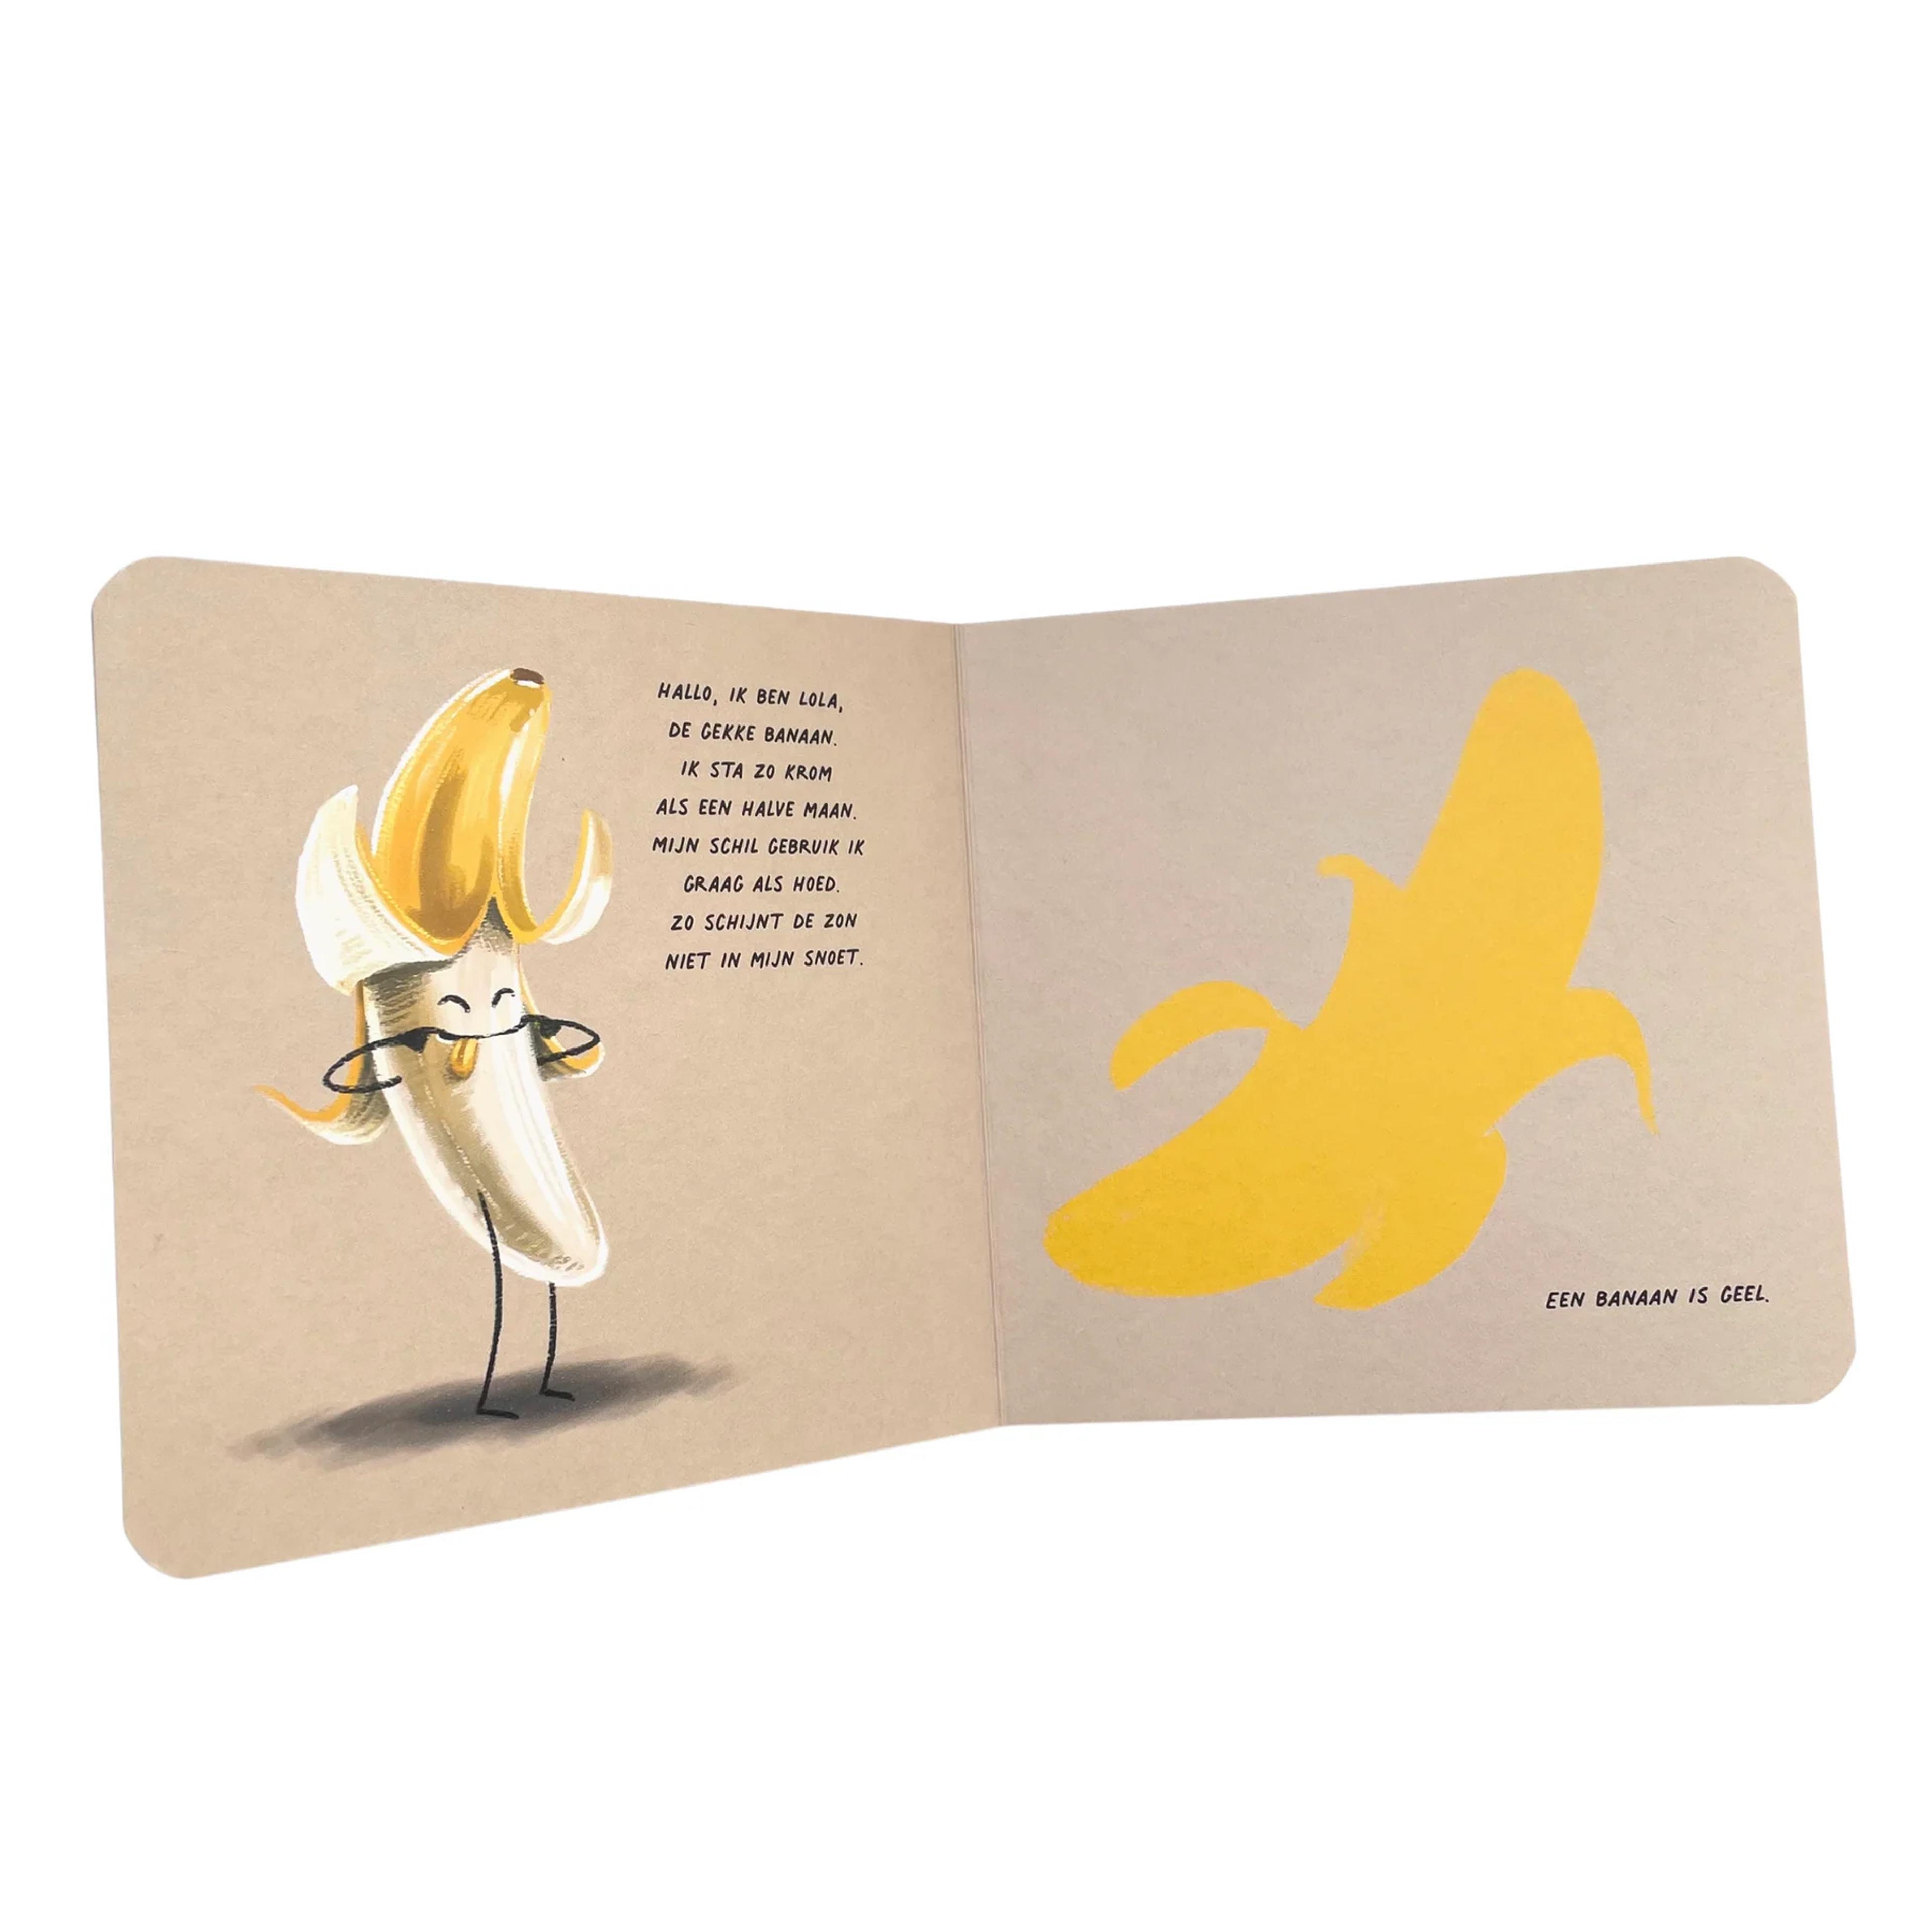 Image for Going bananas